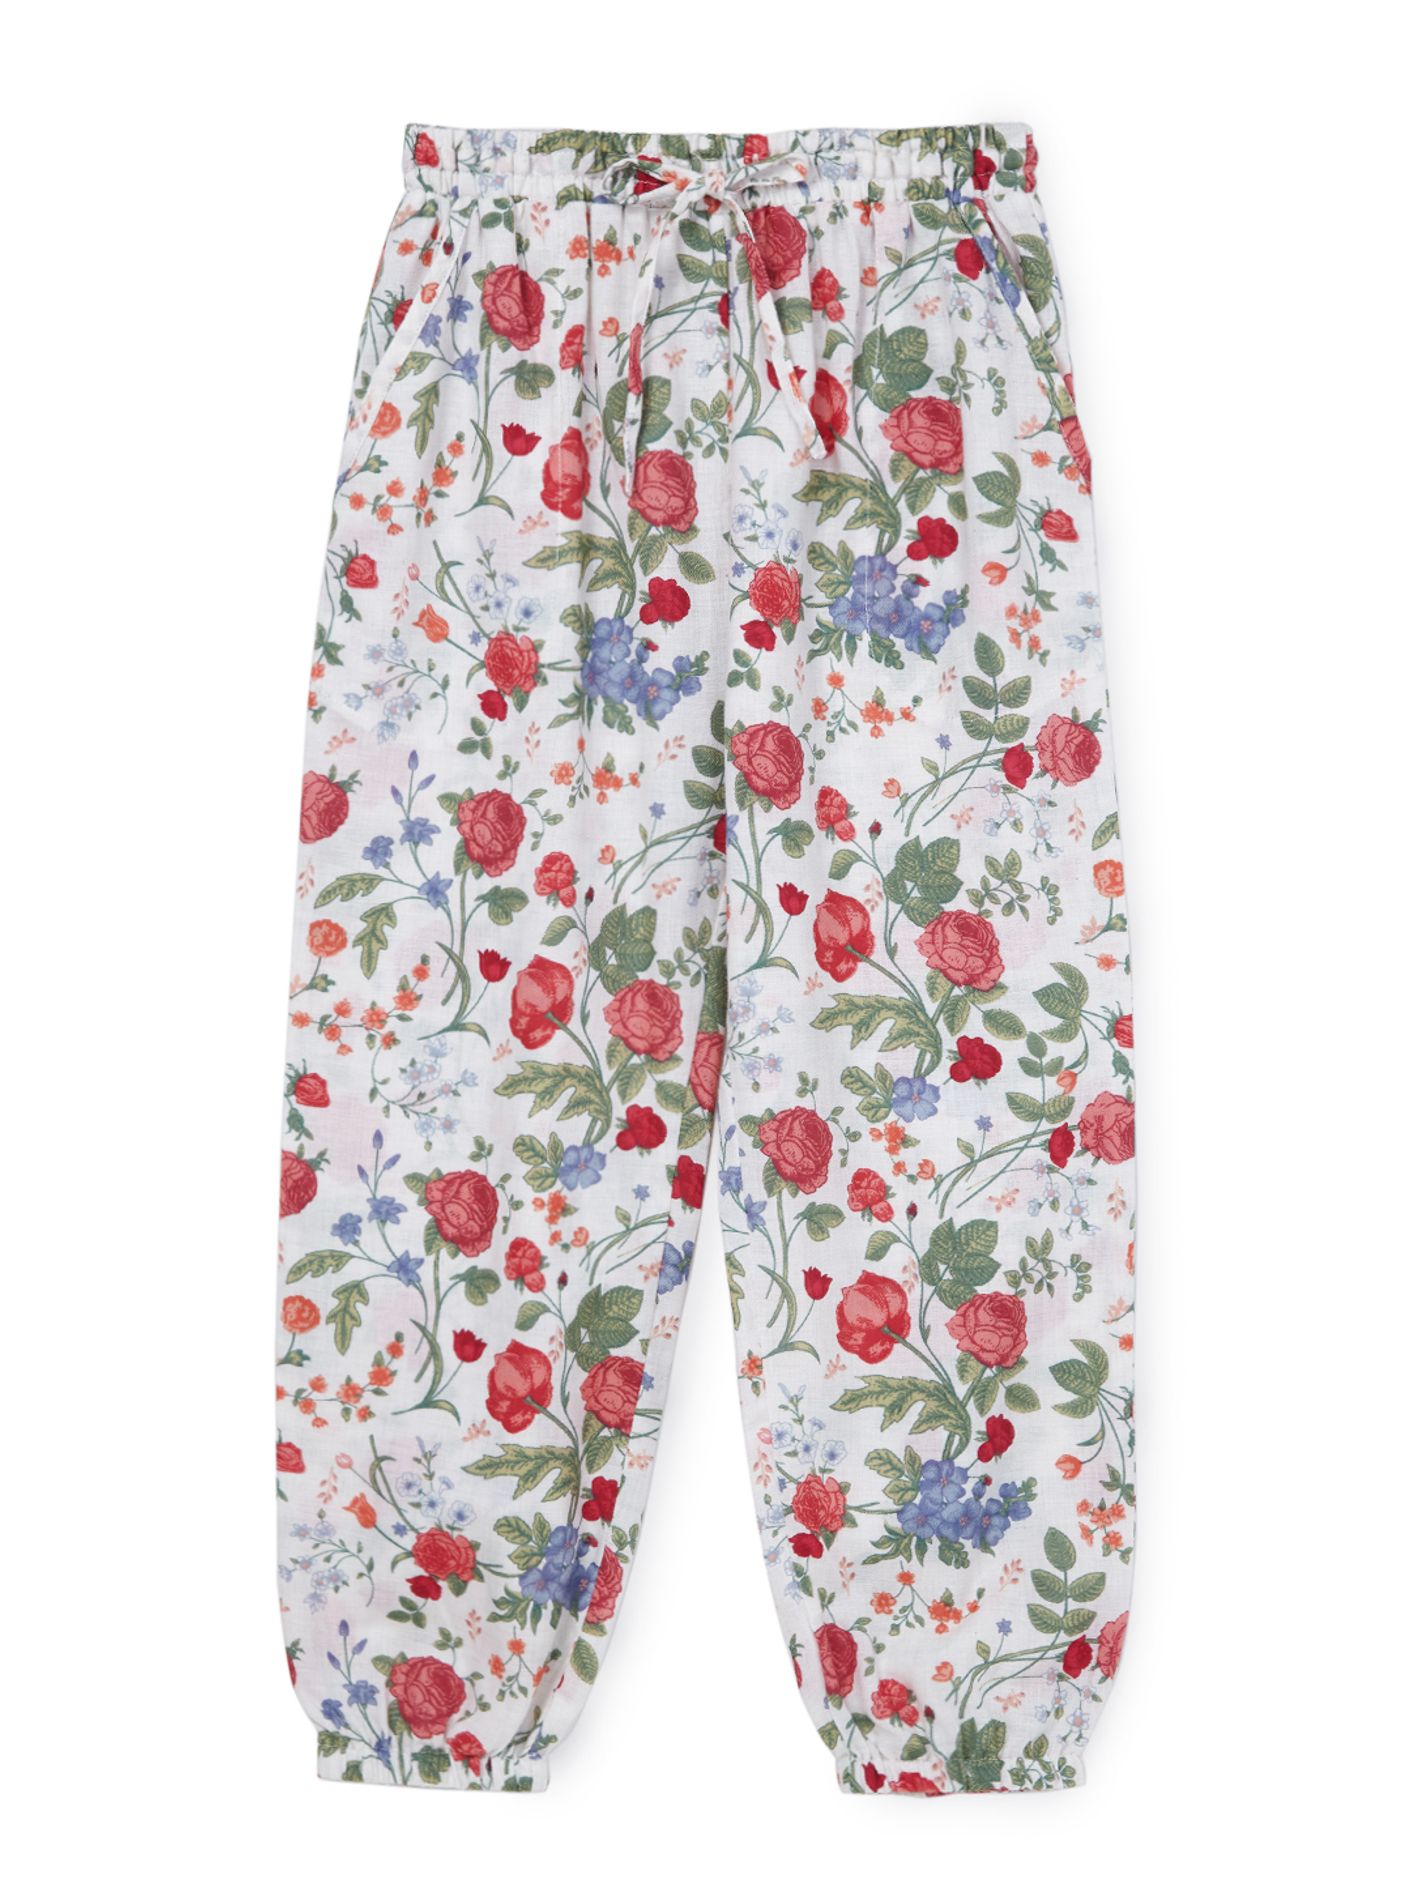 Buy Girls Pant - Floral Printed Pants Online at 55% OFF | Cub McPaws